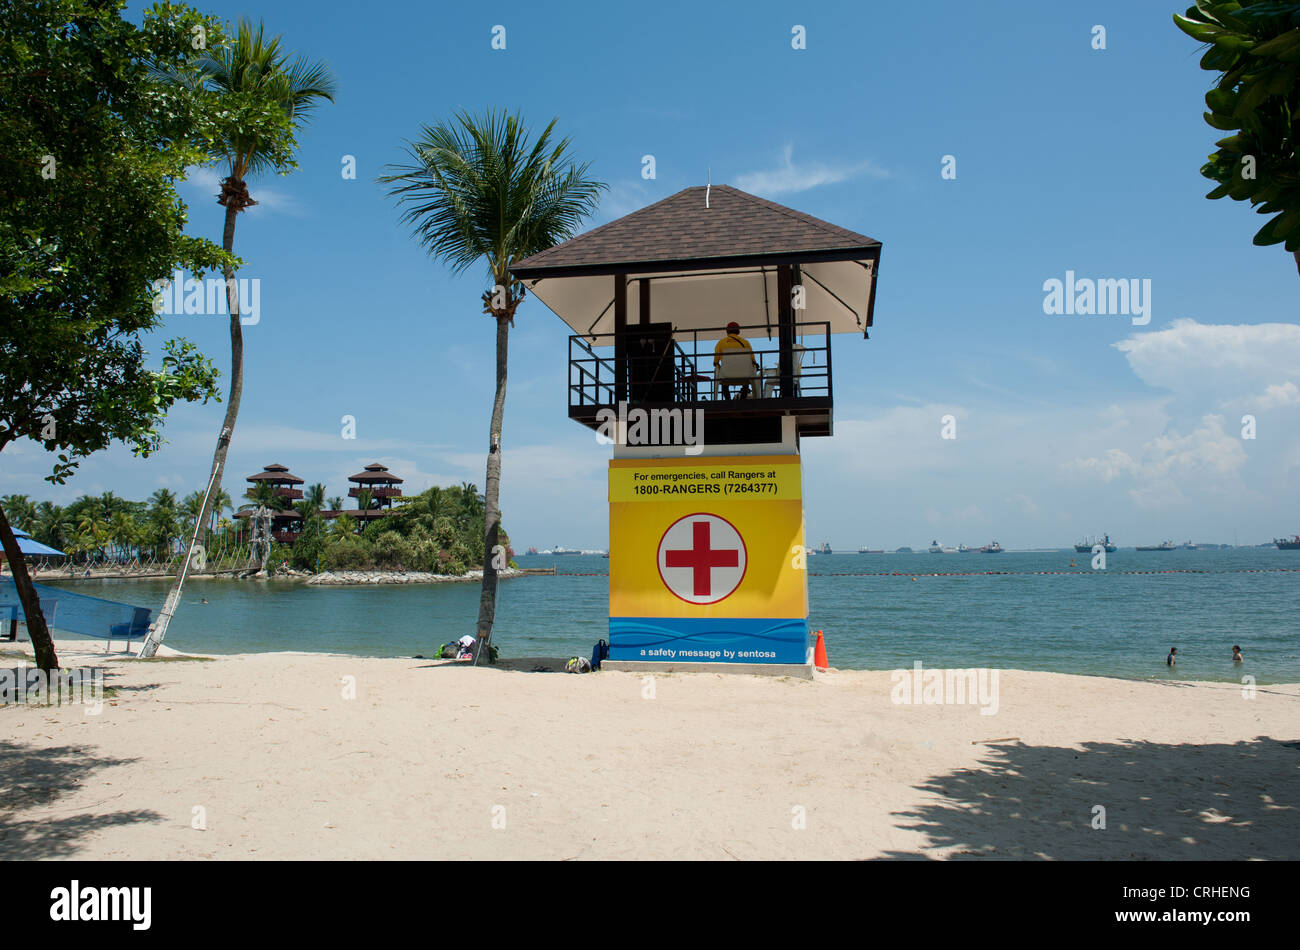 Life saver's post at Palawan beach on Sentosa island, Singapore, Asia Stock Photo